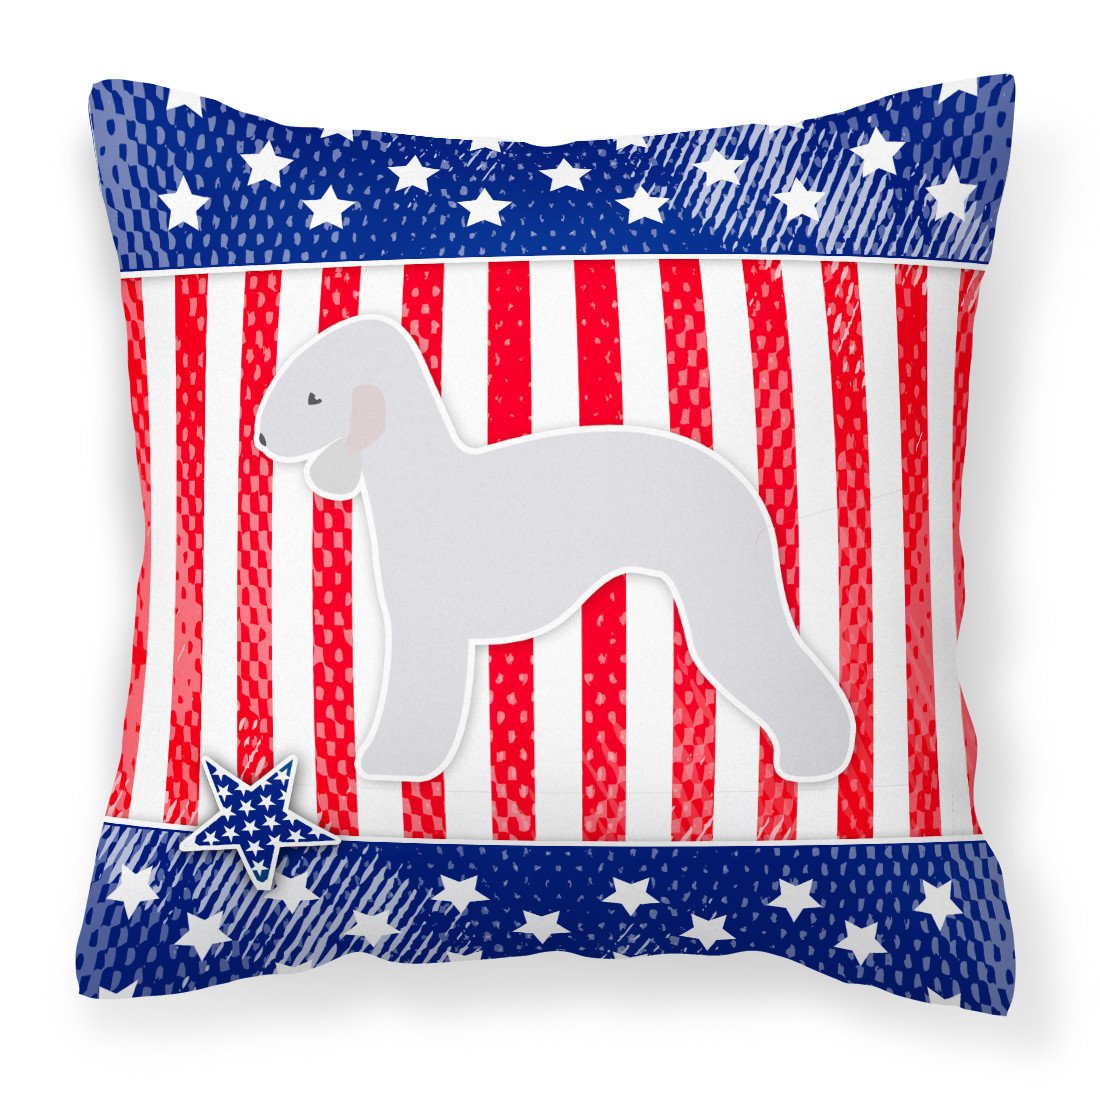 USA Patriotic Bedlington Terrier Fabric Decorative Pillow BB3294PW1818 by Caroline's Treasures